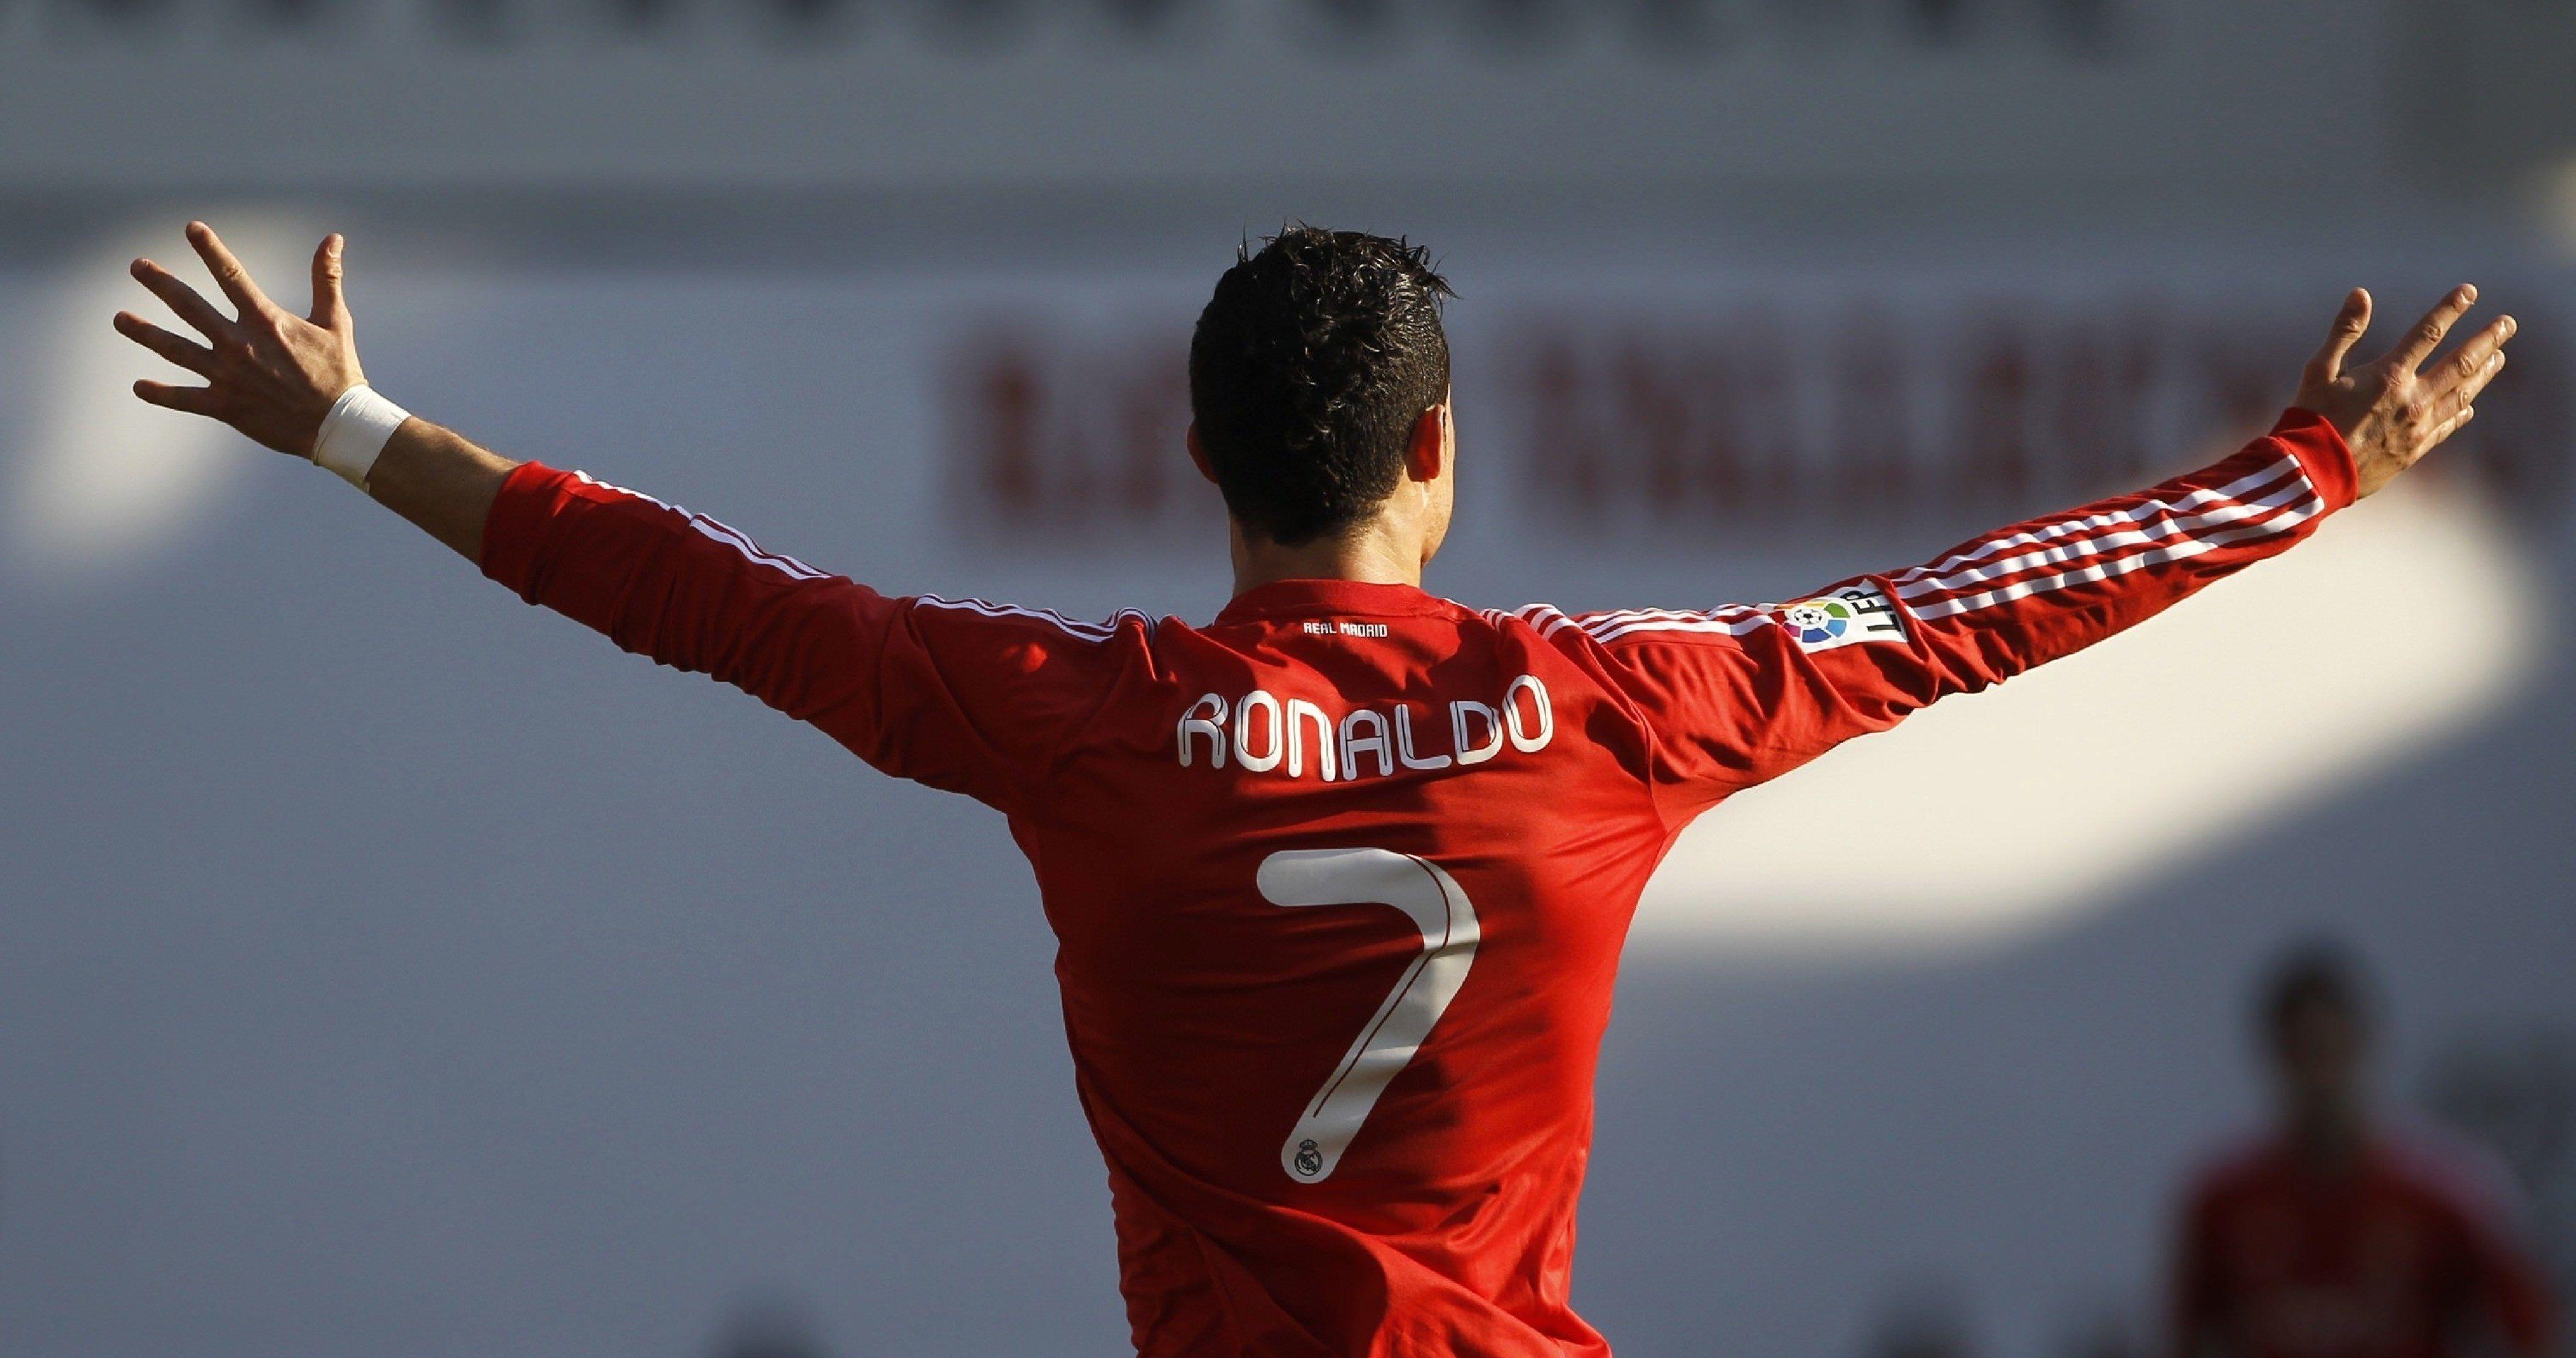 Cristiano Ronaldo Soccer Player 4k Ultra HD